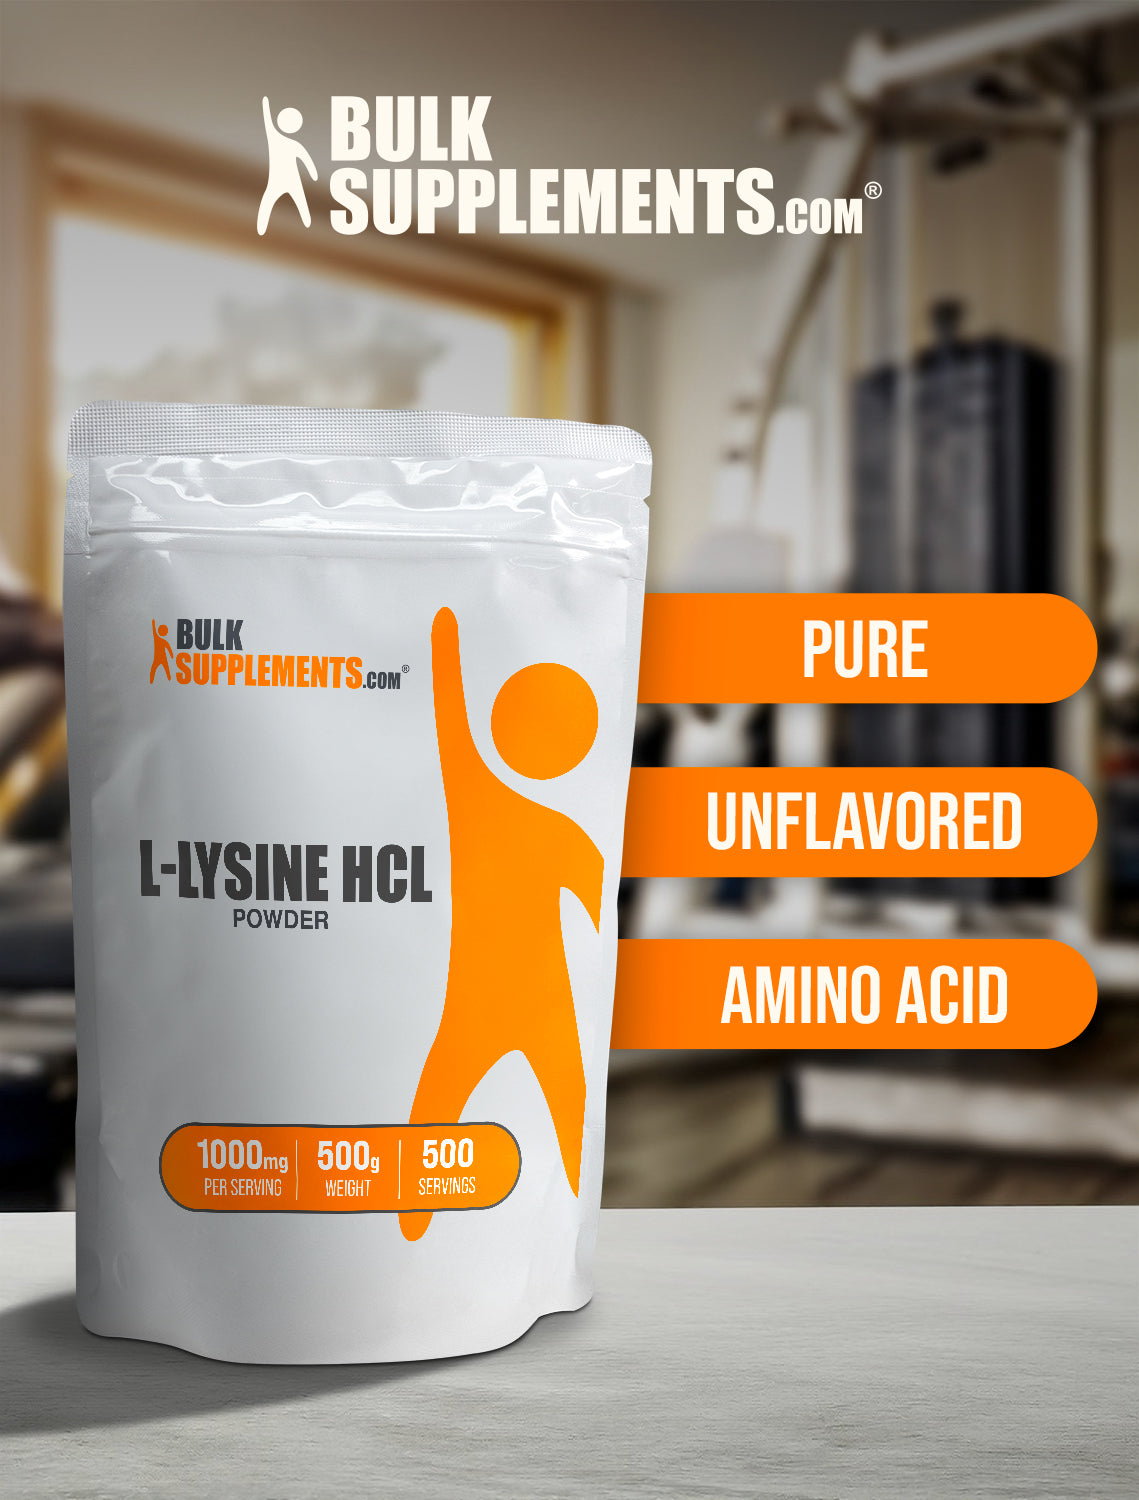 L-Lysine HCl powder 500g keywords image